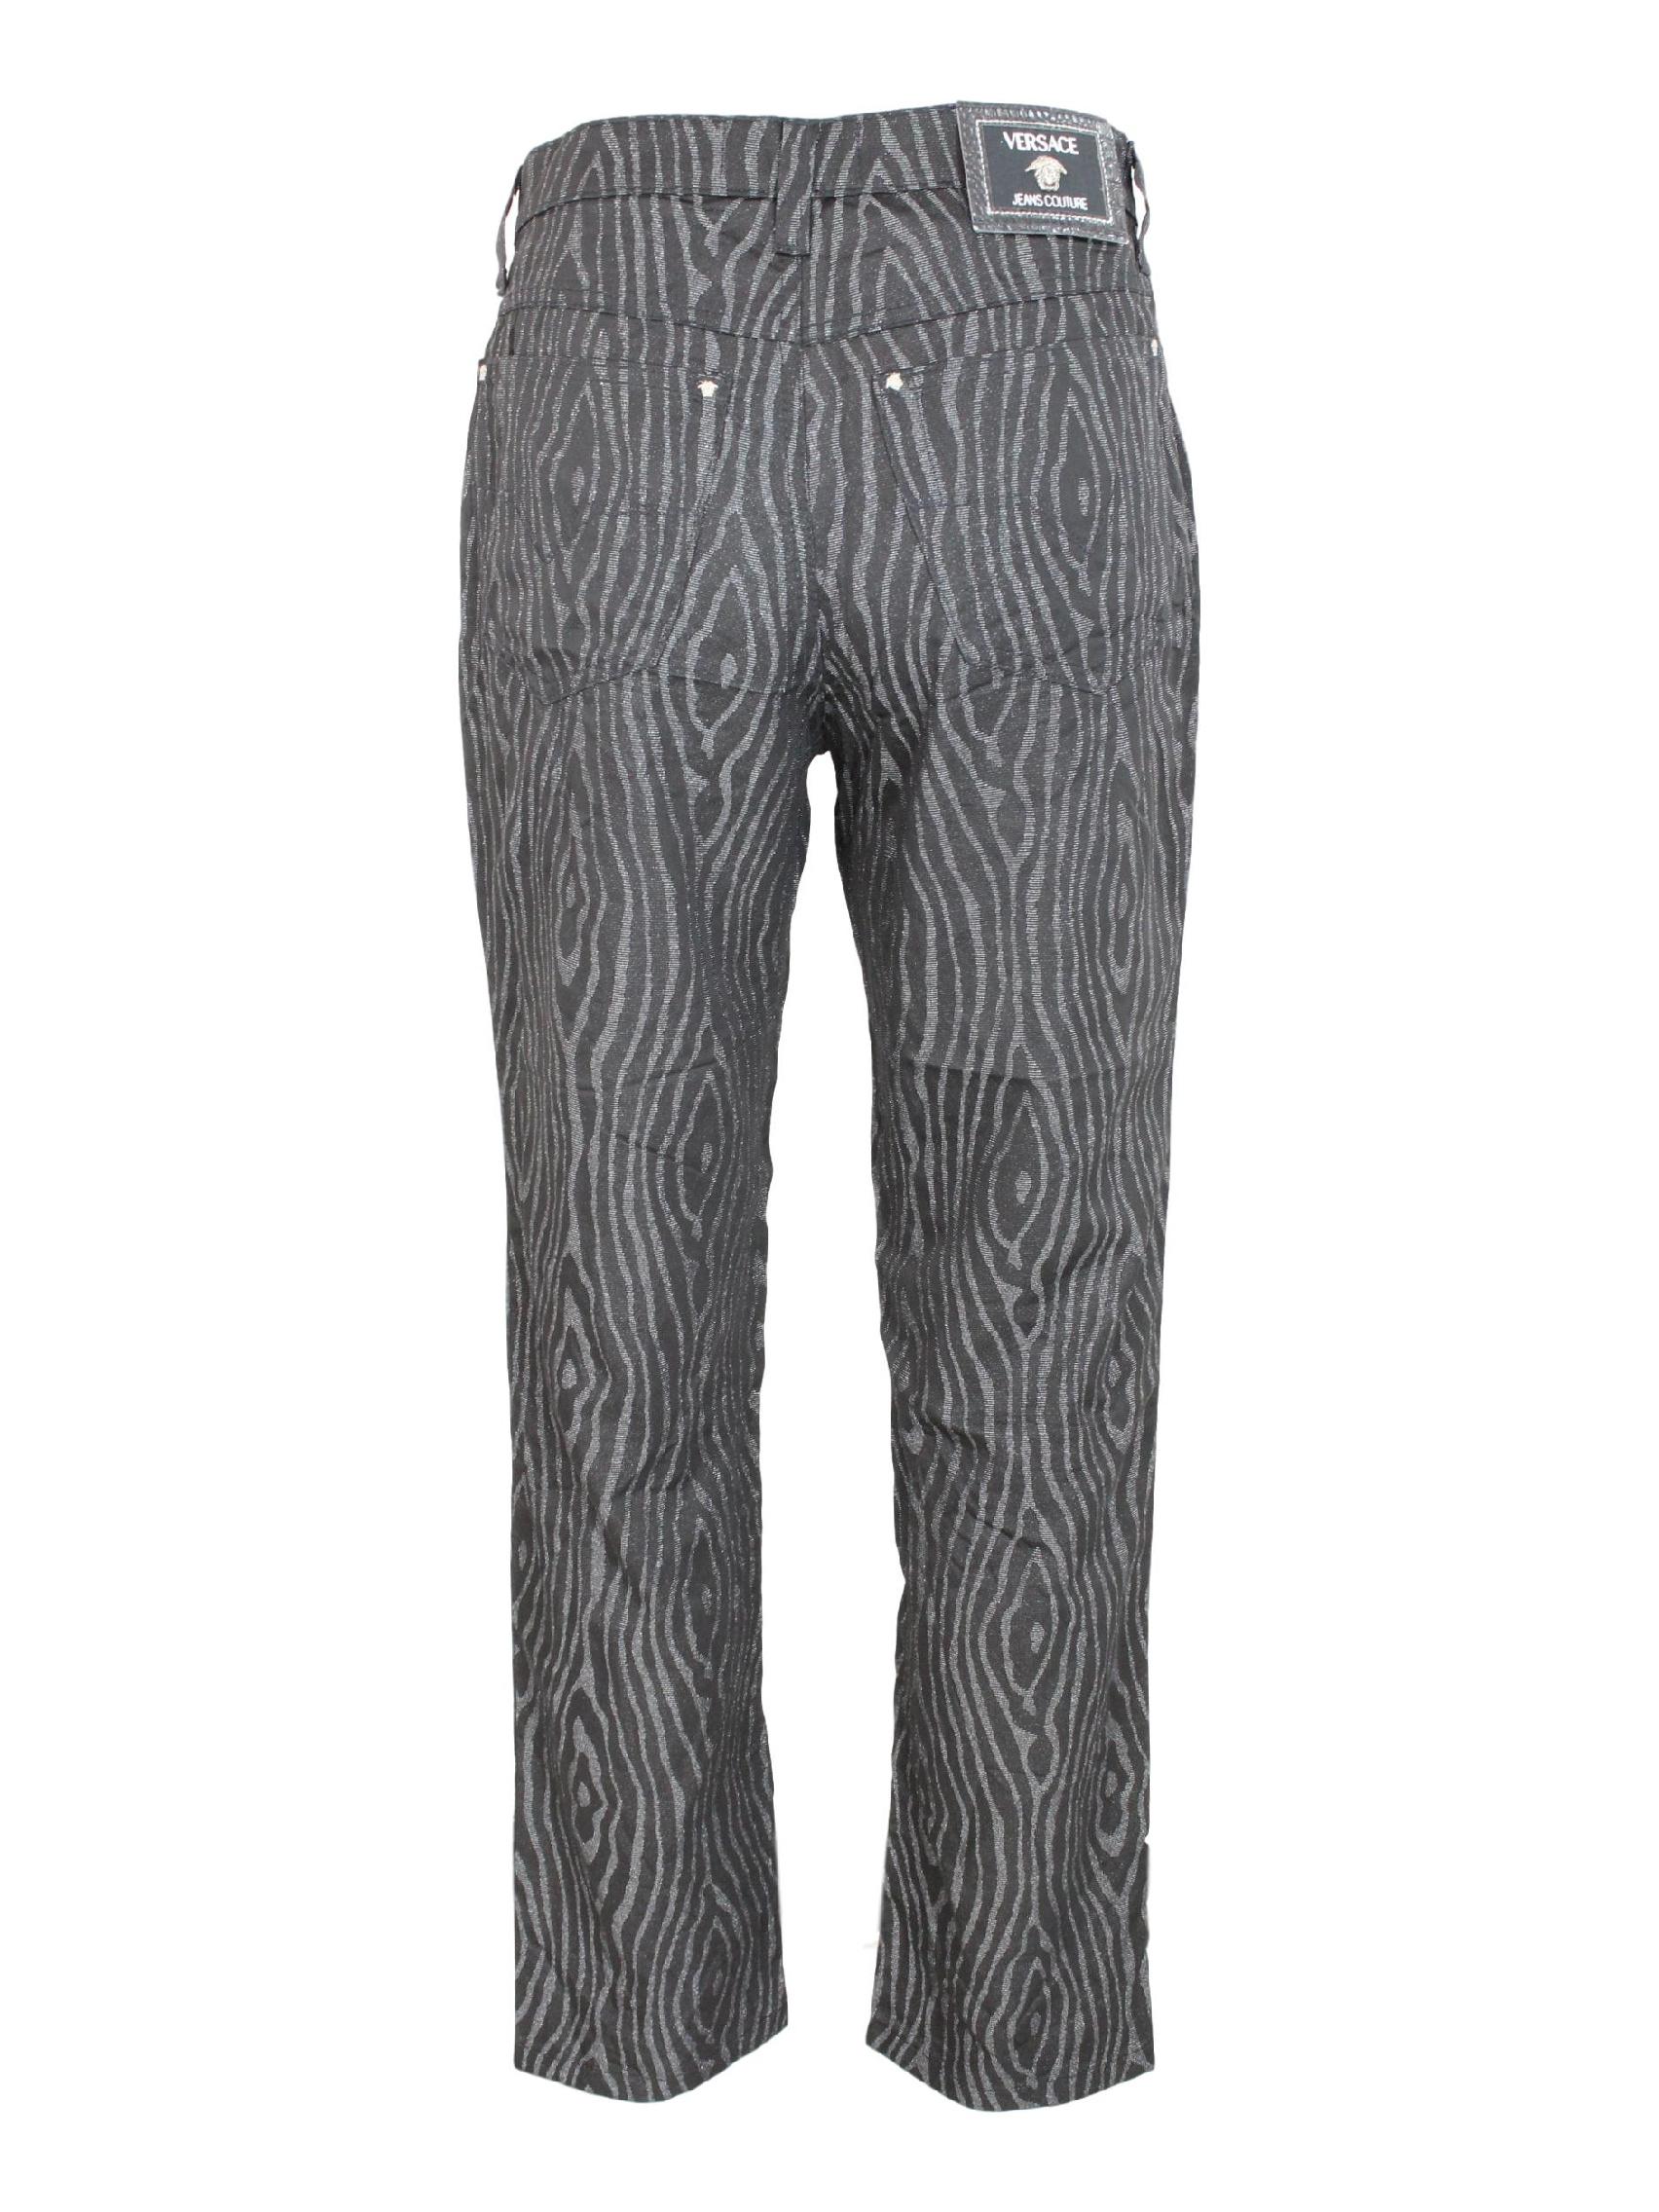 Women's Gianni Versace Black Gray Pinstripe Spotted Lurex Trousers